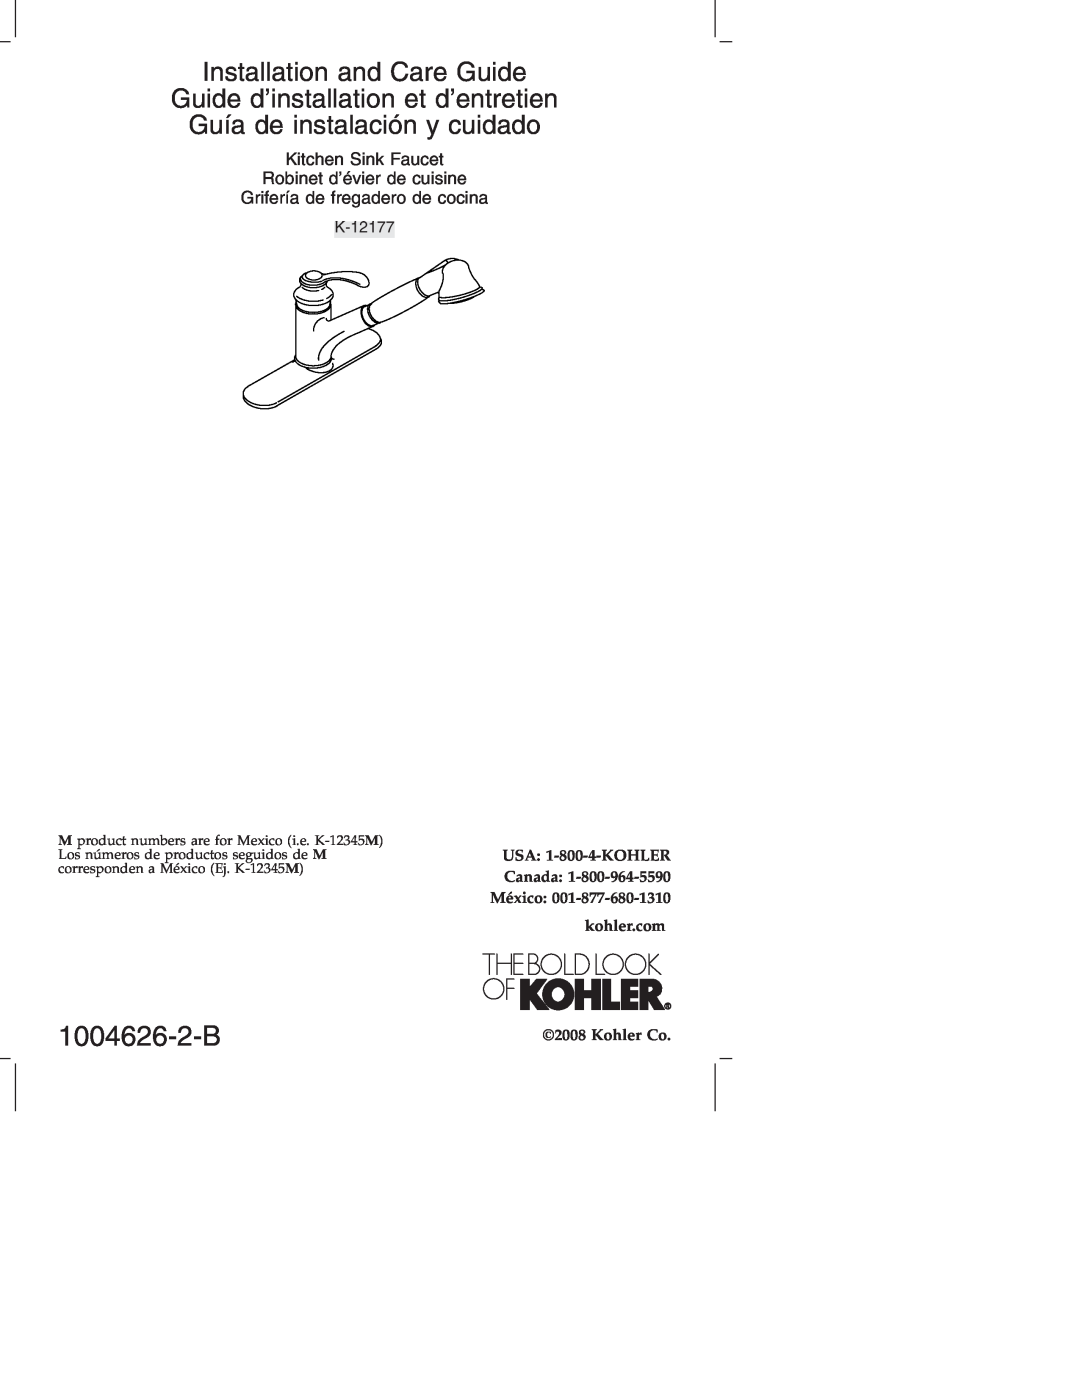 Kohler K-12177 manual 1004626-2-B, Installation and Care Guide, Kitchen Sink Faucet Robinet d’évier de cuisine 